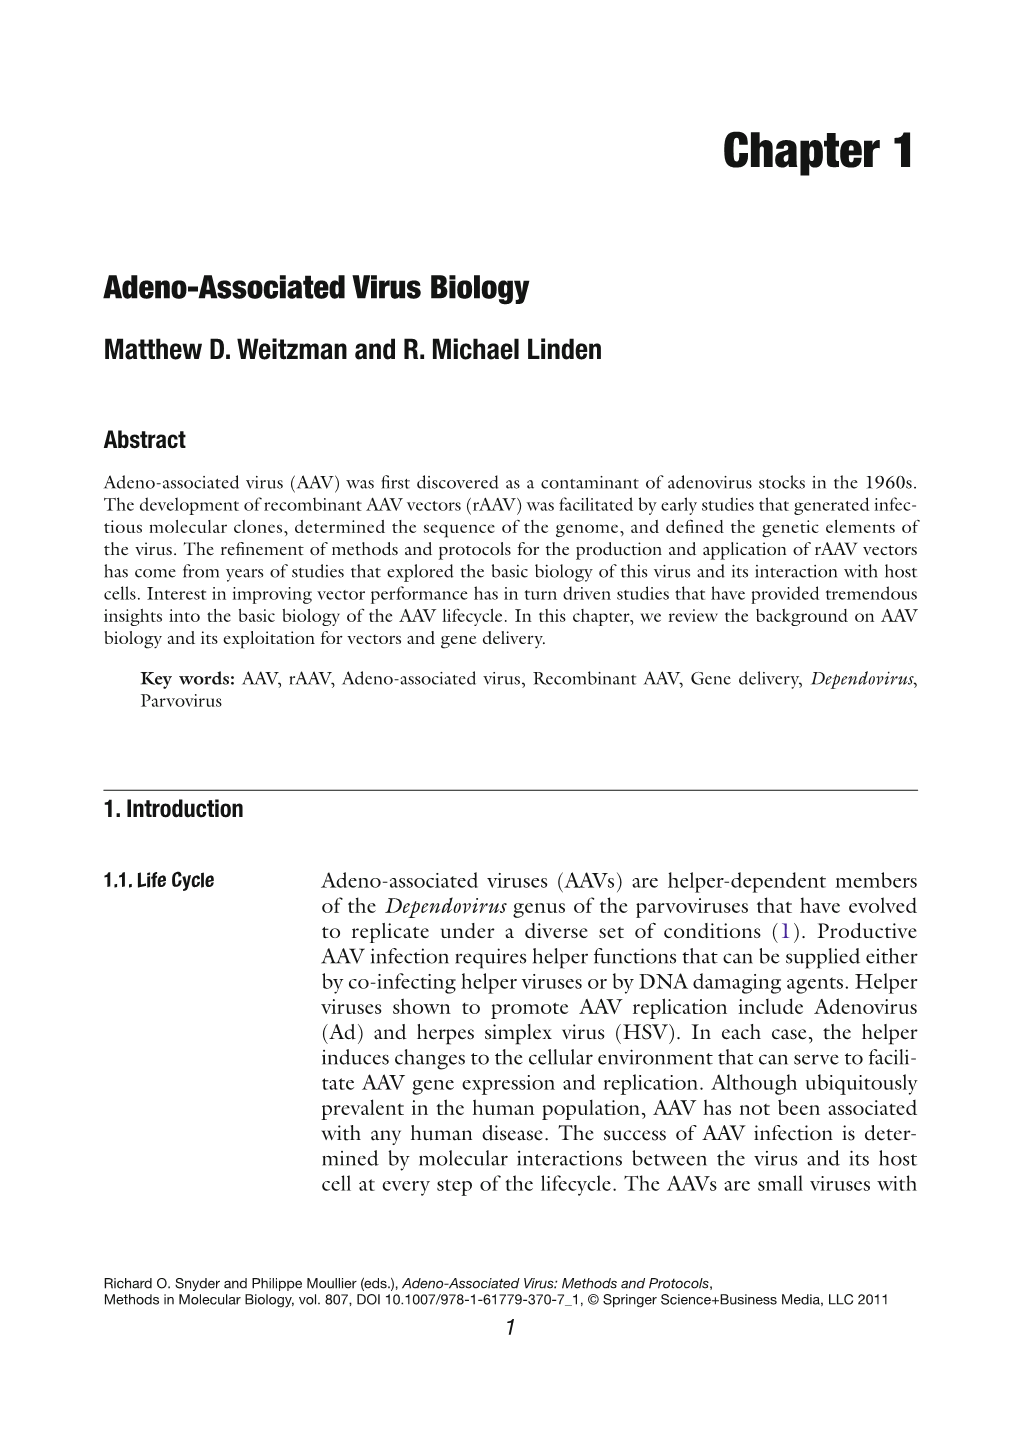 Chapter 1 Adeno-Associated Virus Biology